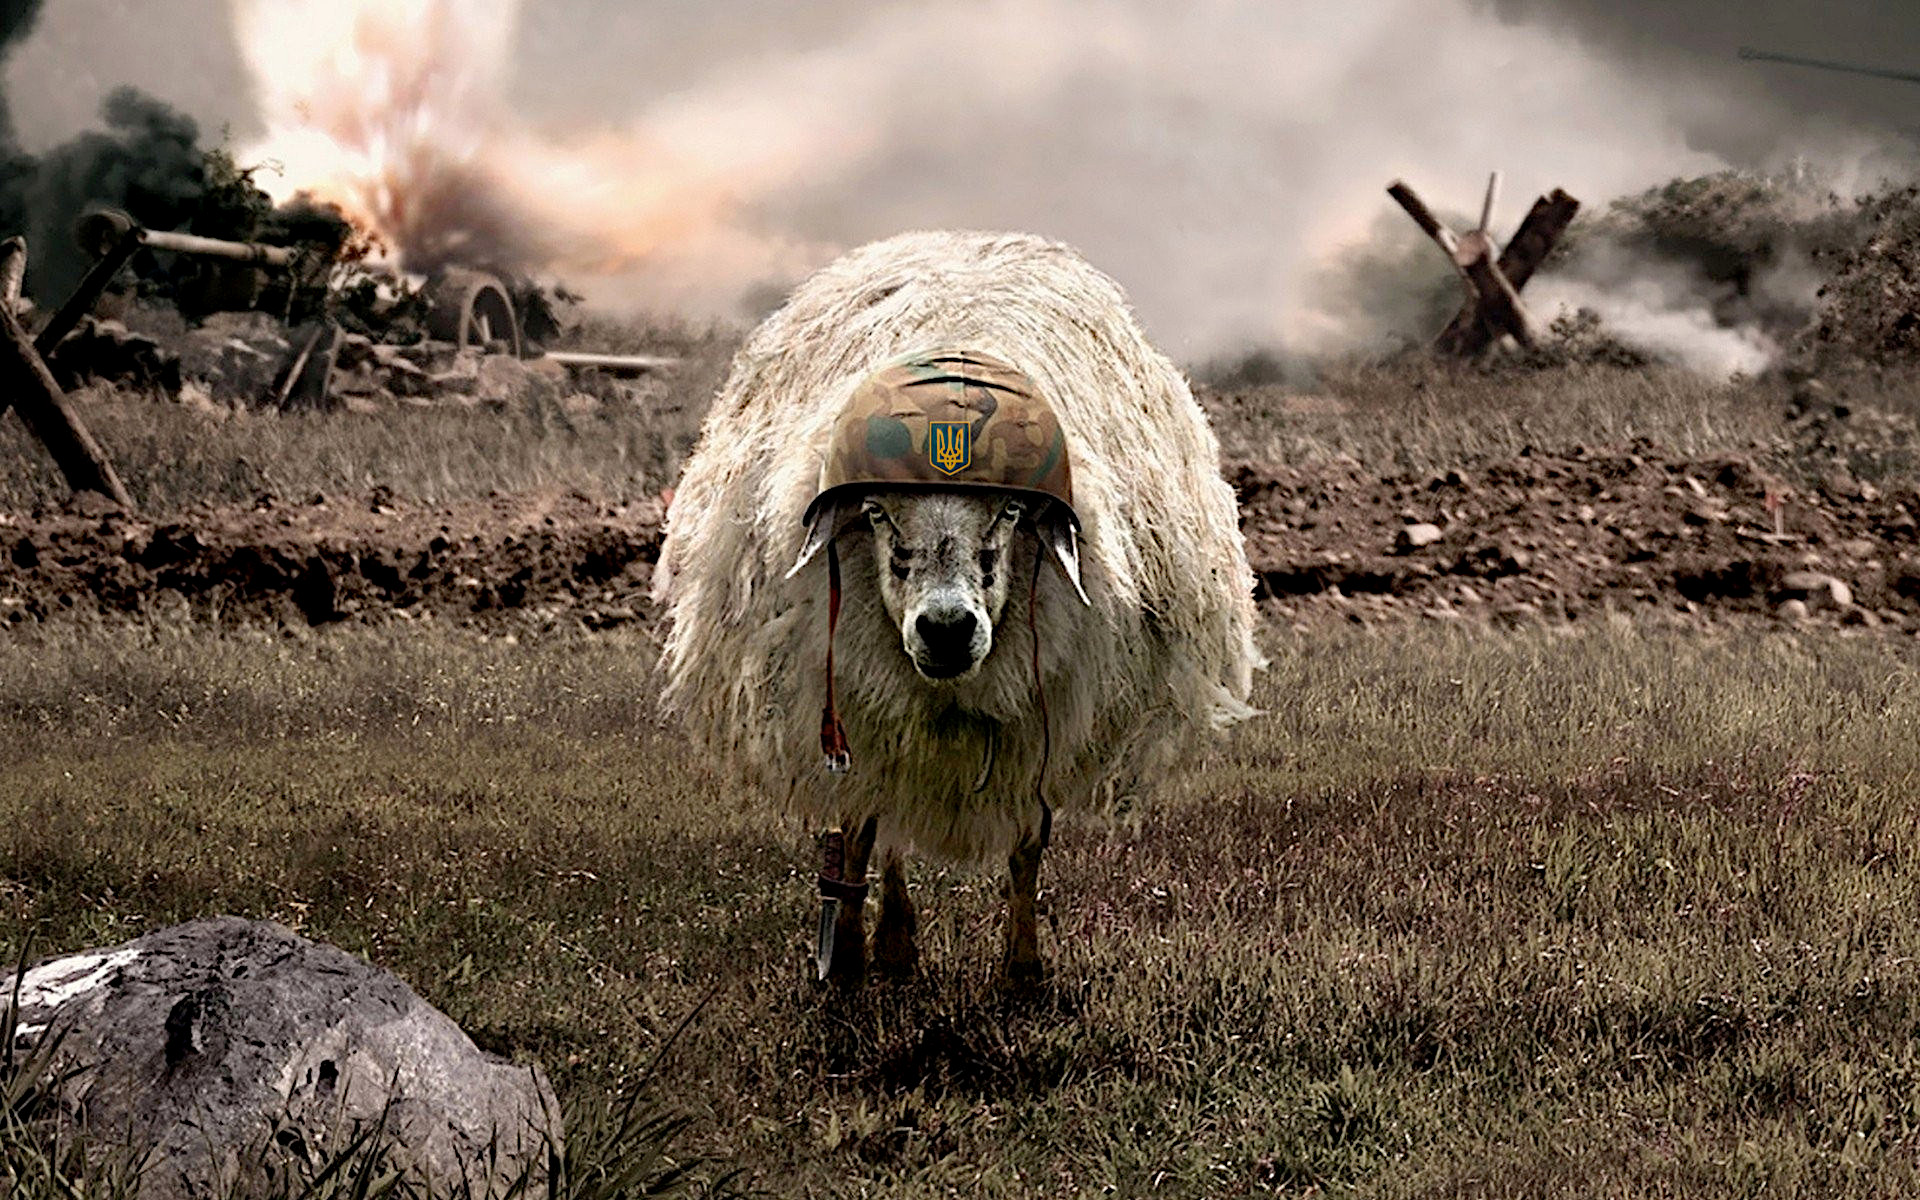 A sheep in a military helmet